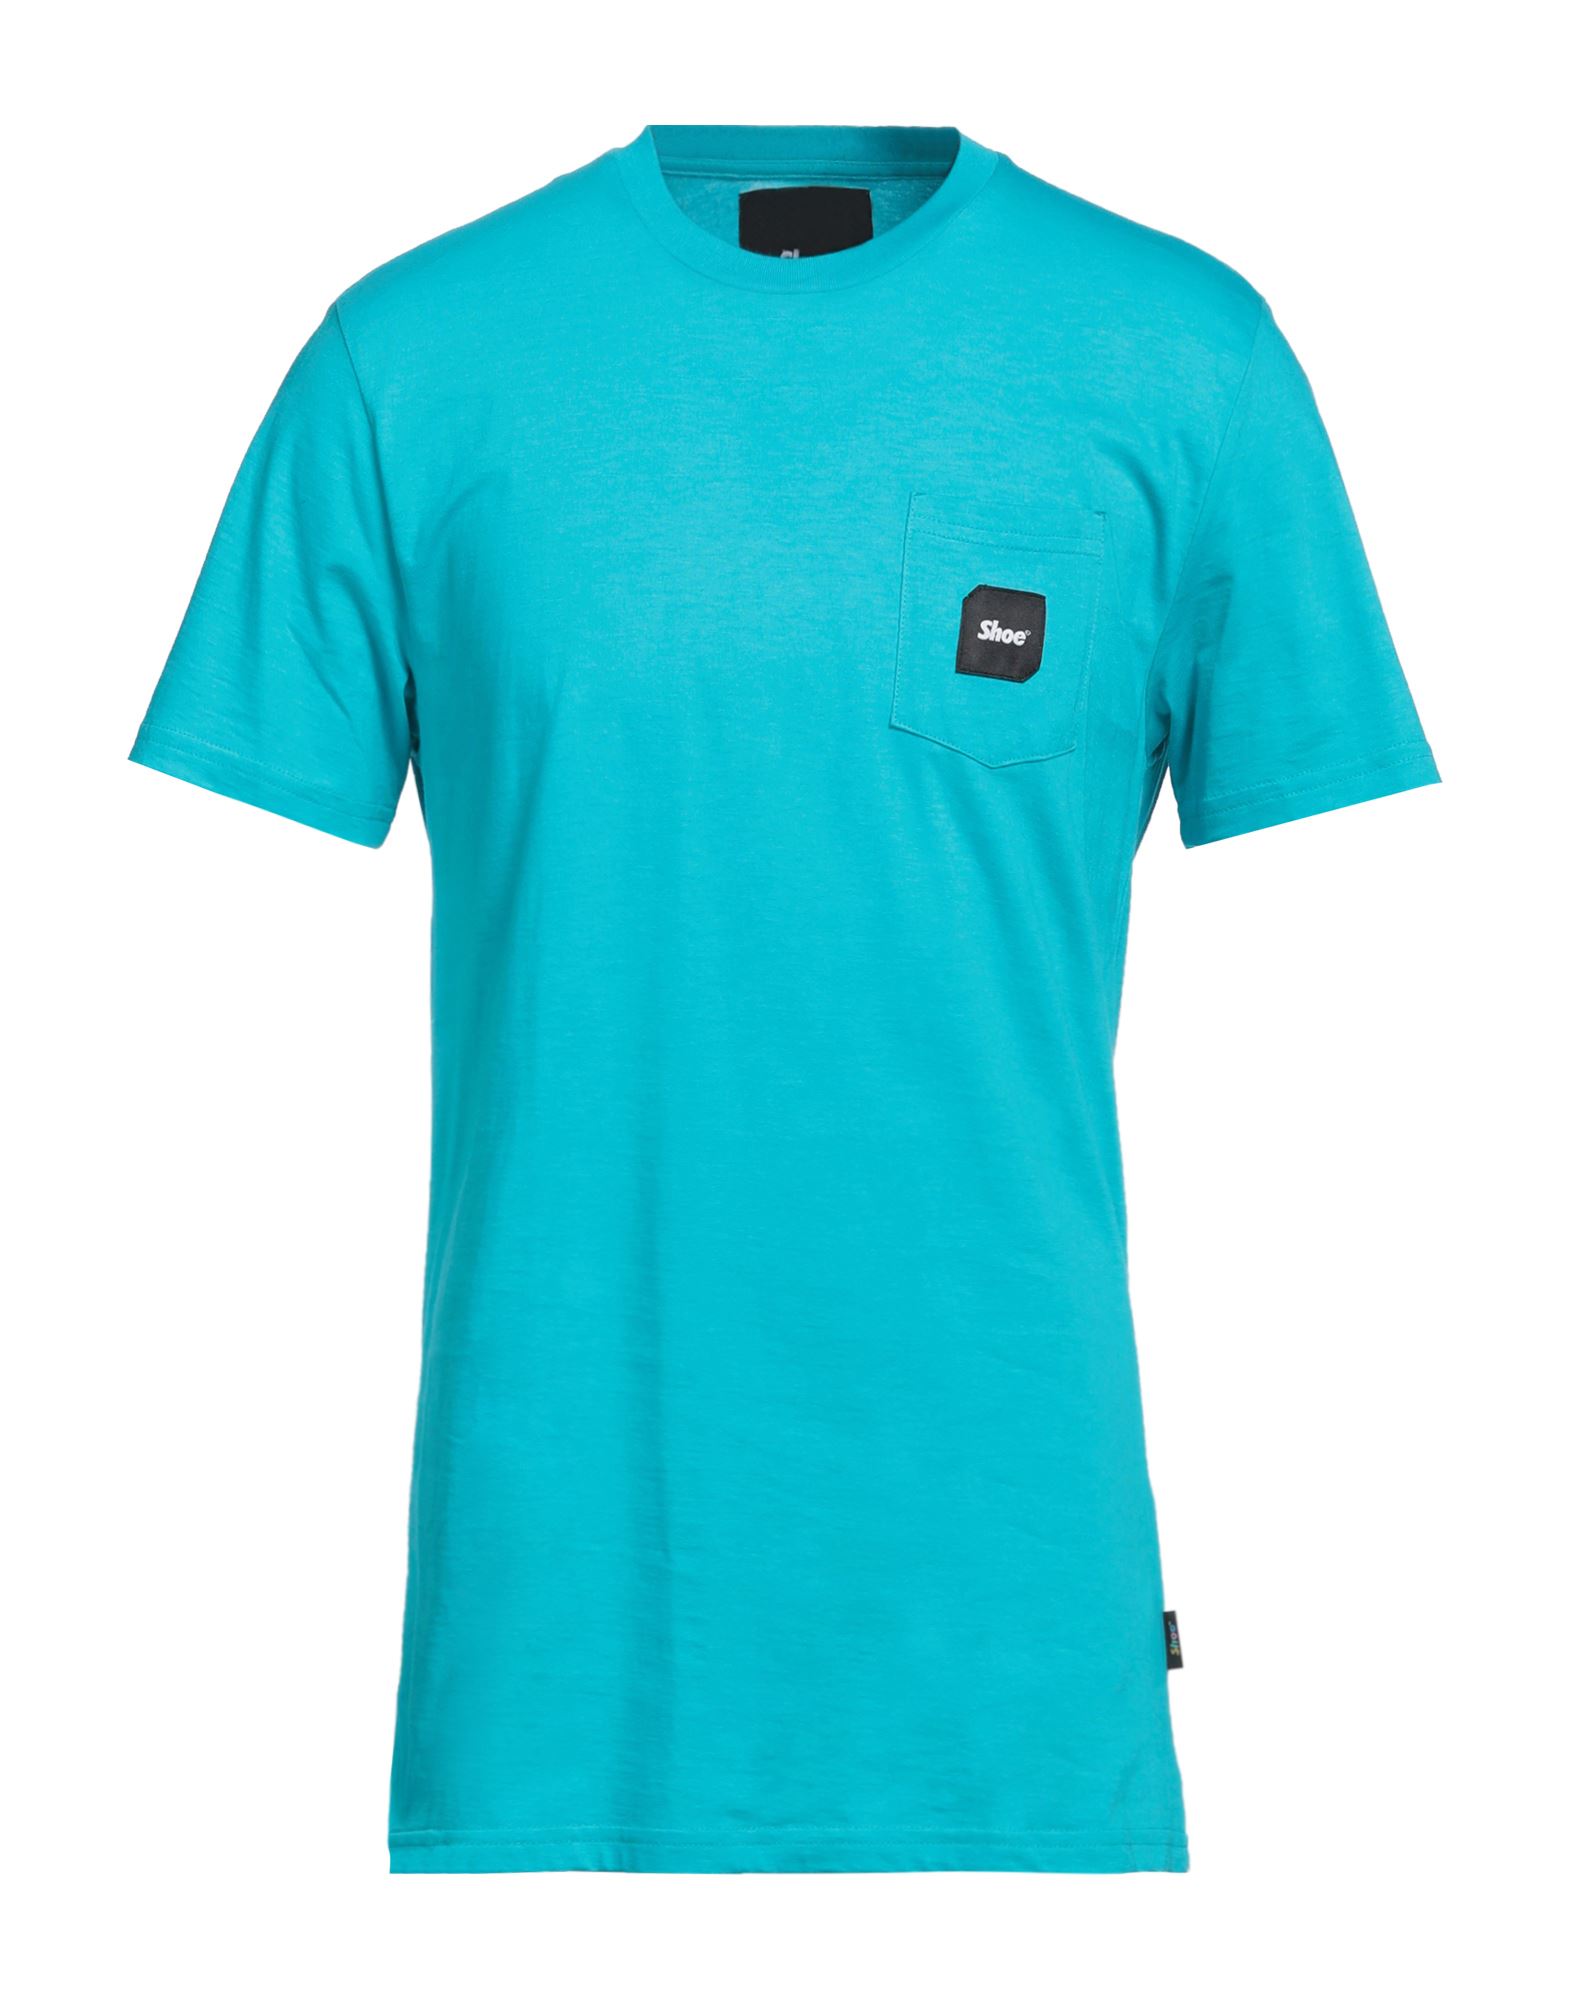 Shoe® Shoe Man T-shirt Turquoise Size Xxl Cotton In Blue